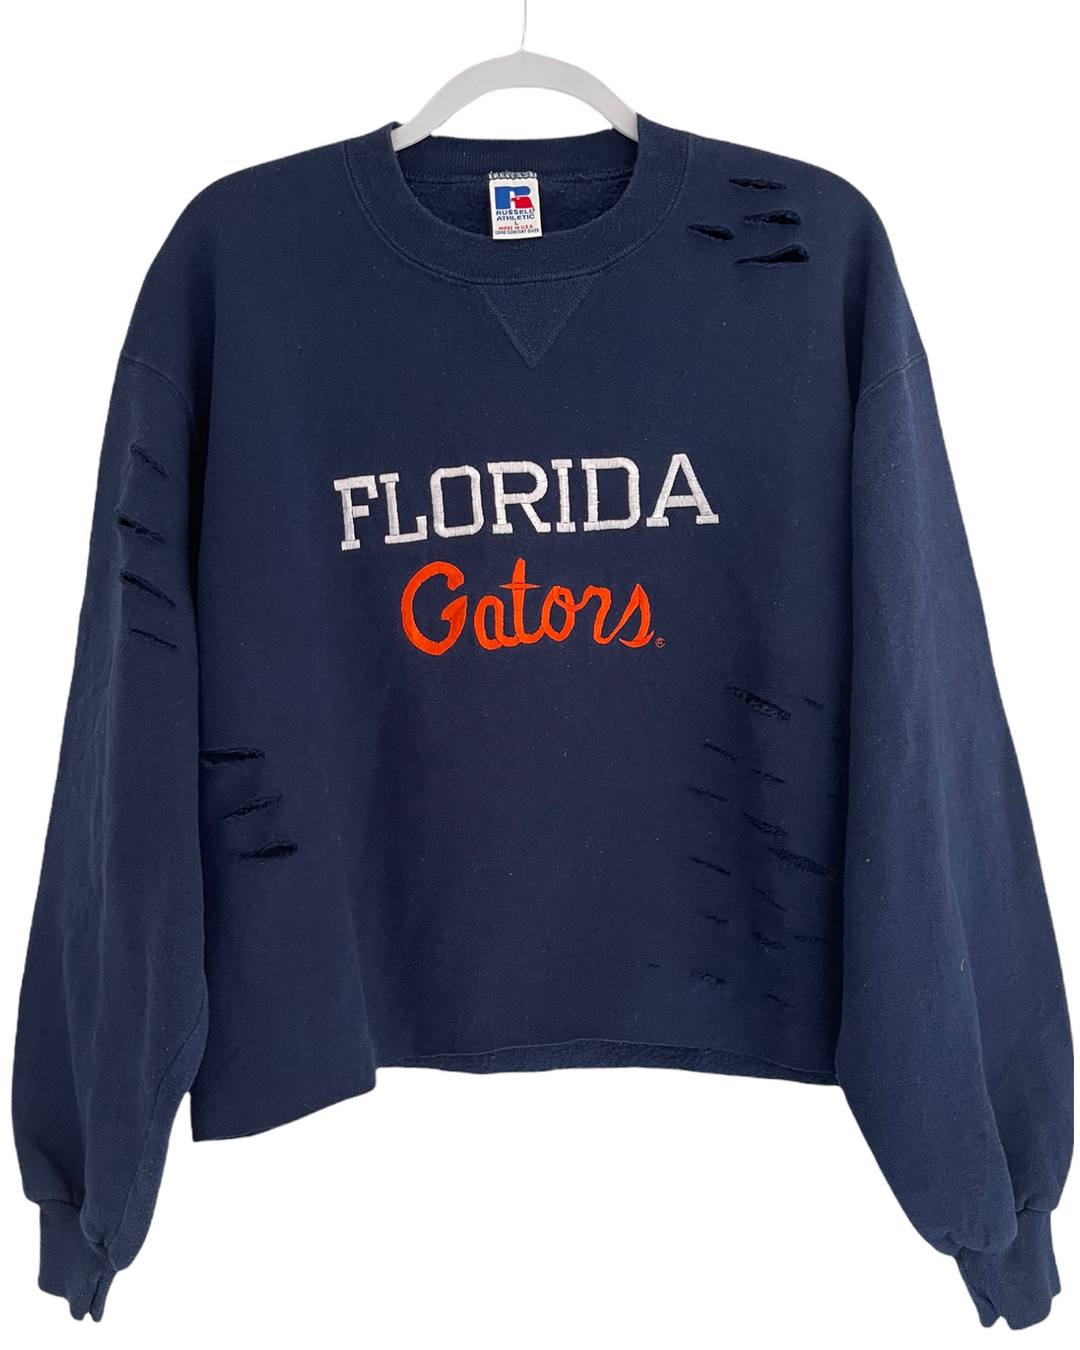 Florida Gators Vintage Cropped Sweatshirt